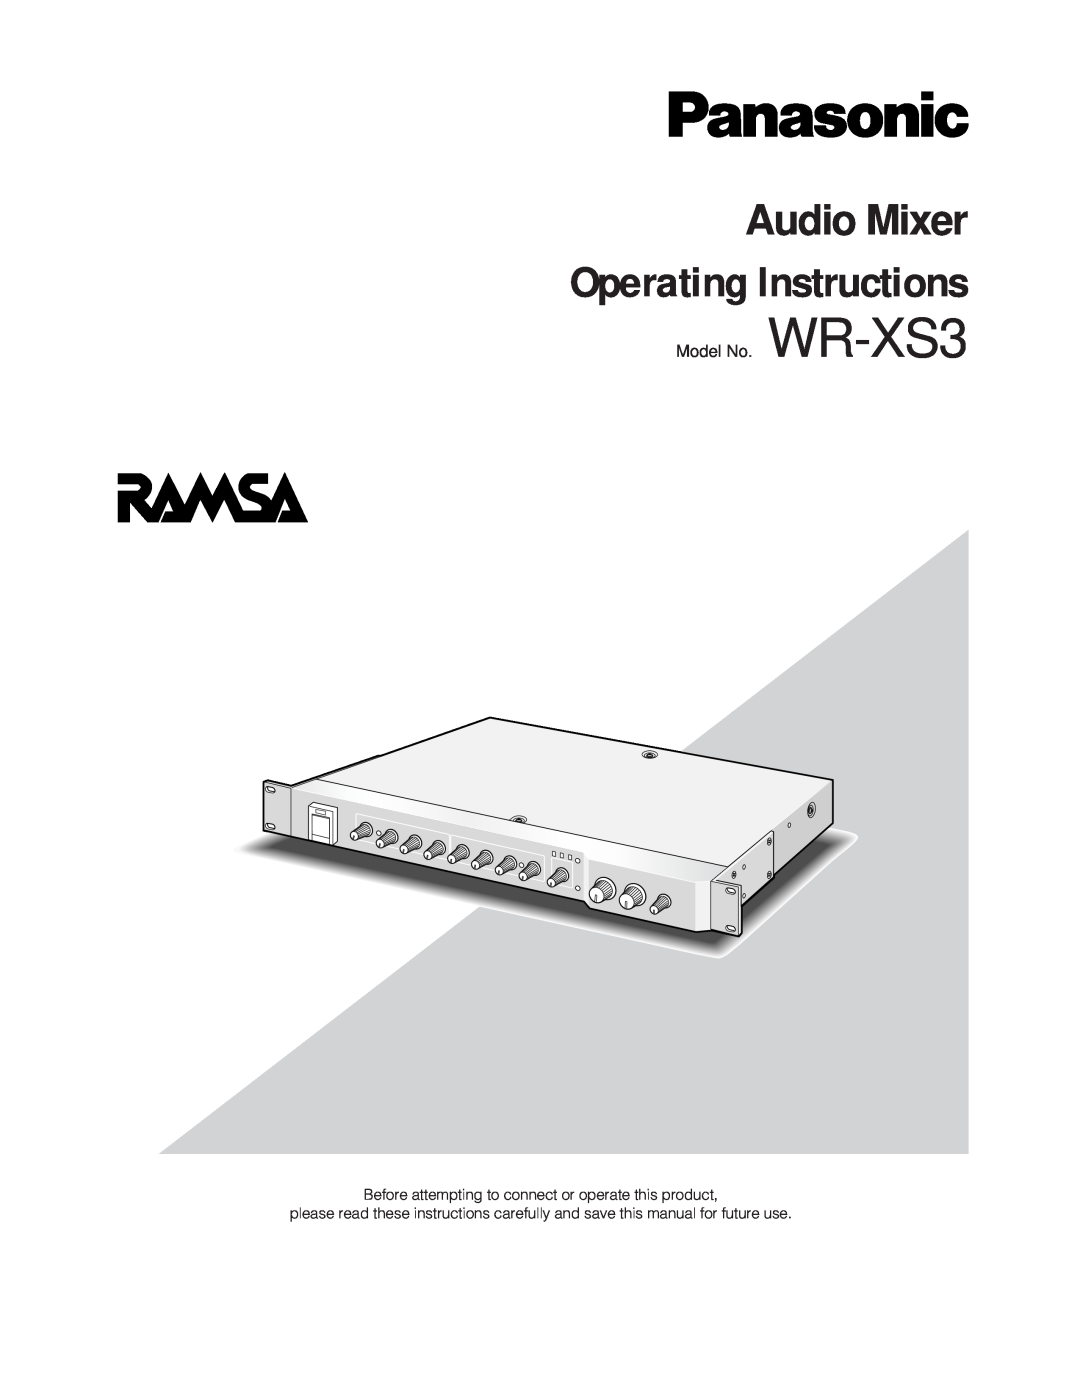 Panasonic WR-XS3P operating instructions Model No. WR-XS3, Operating Instructions, Audio Mixer 